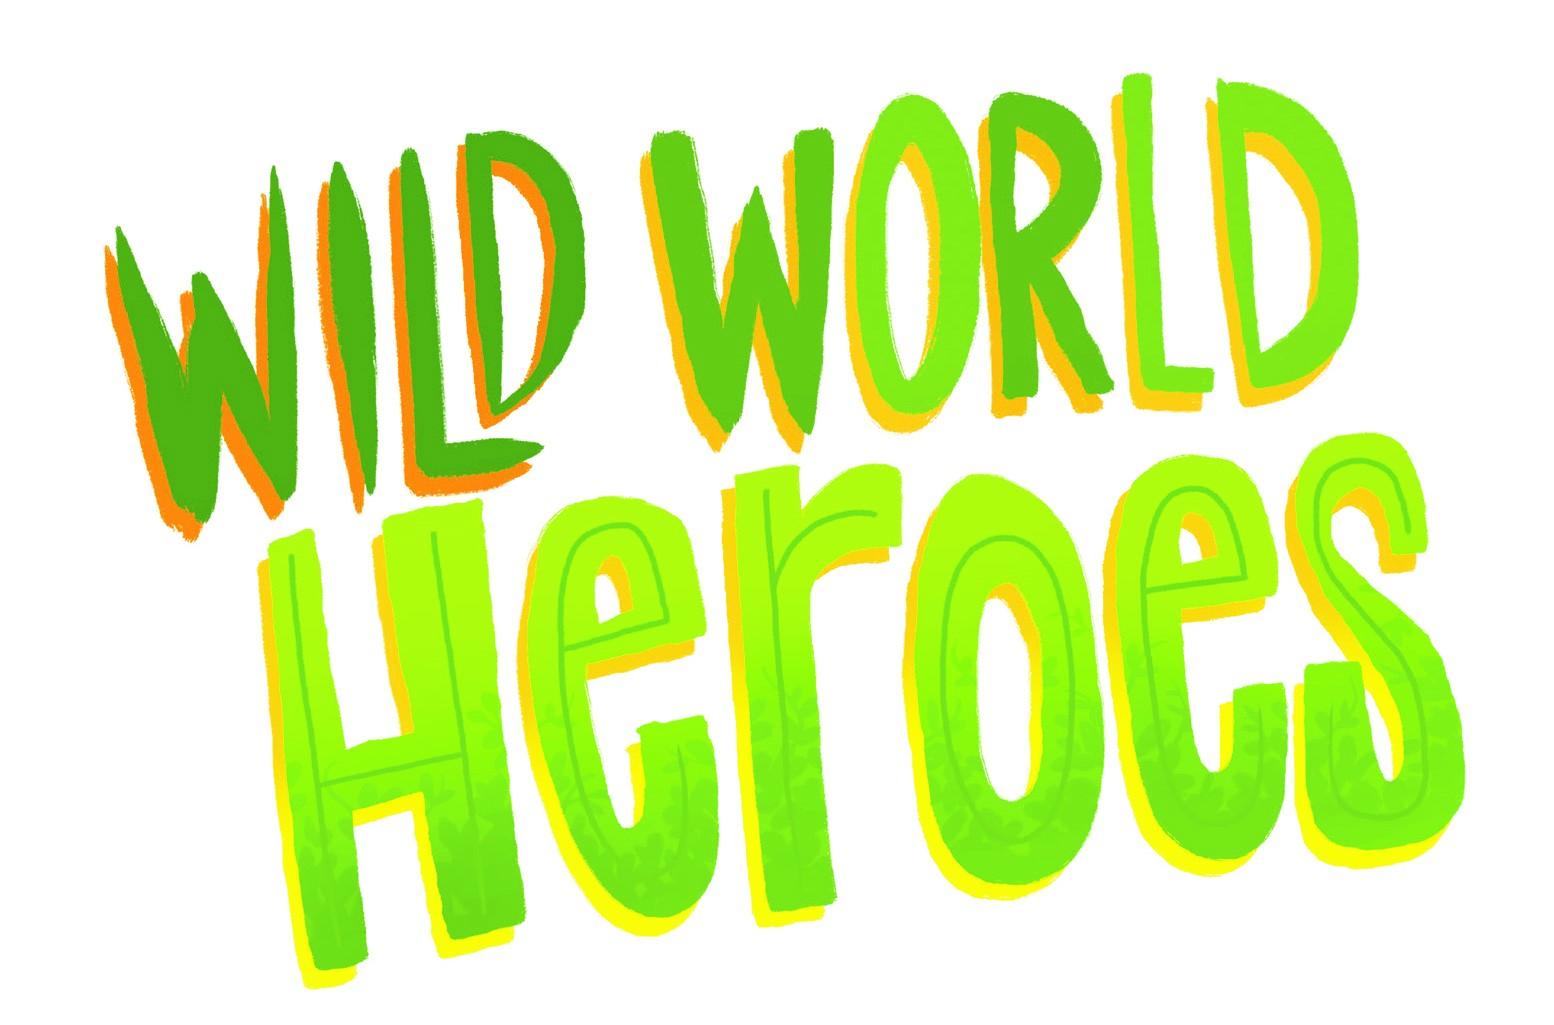 Summer Reading Challenge 2021 Wild World Heroes